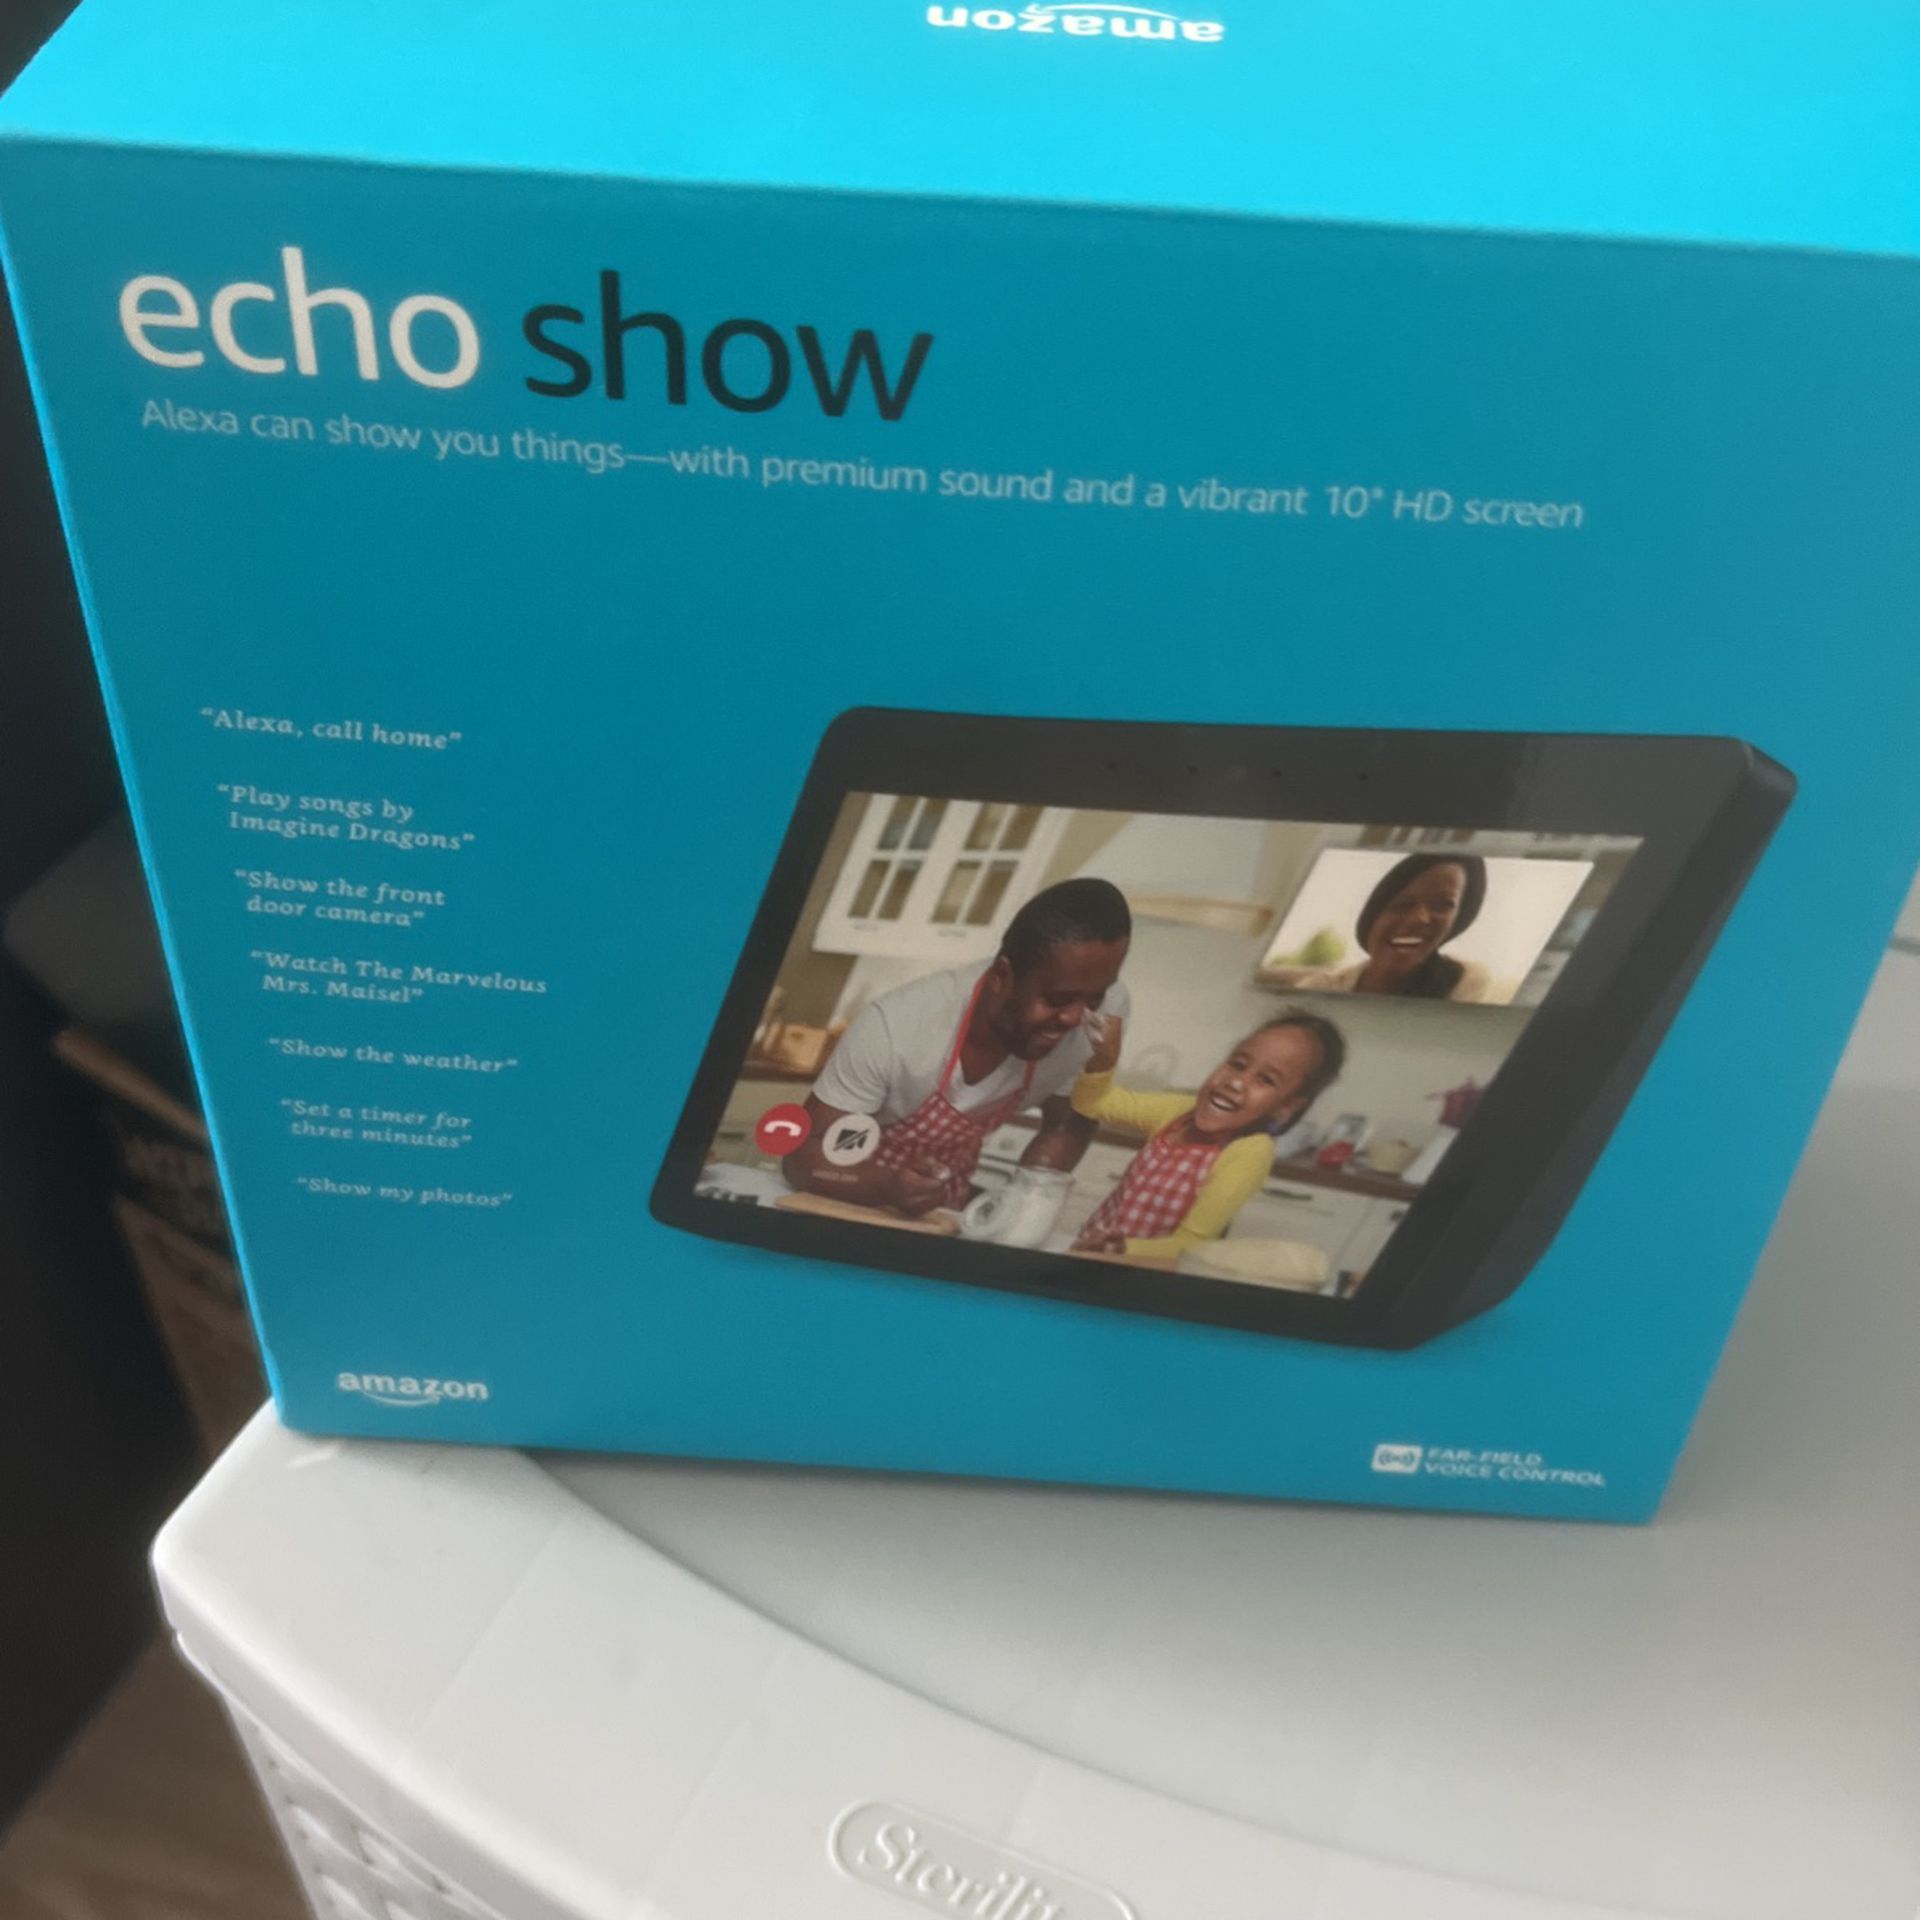 Amazon Echo Show 